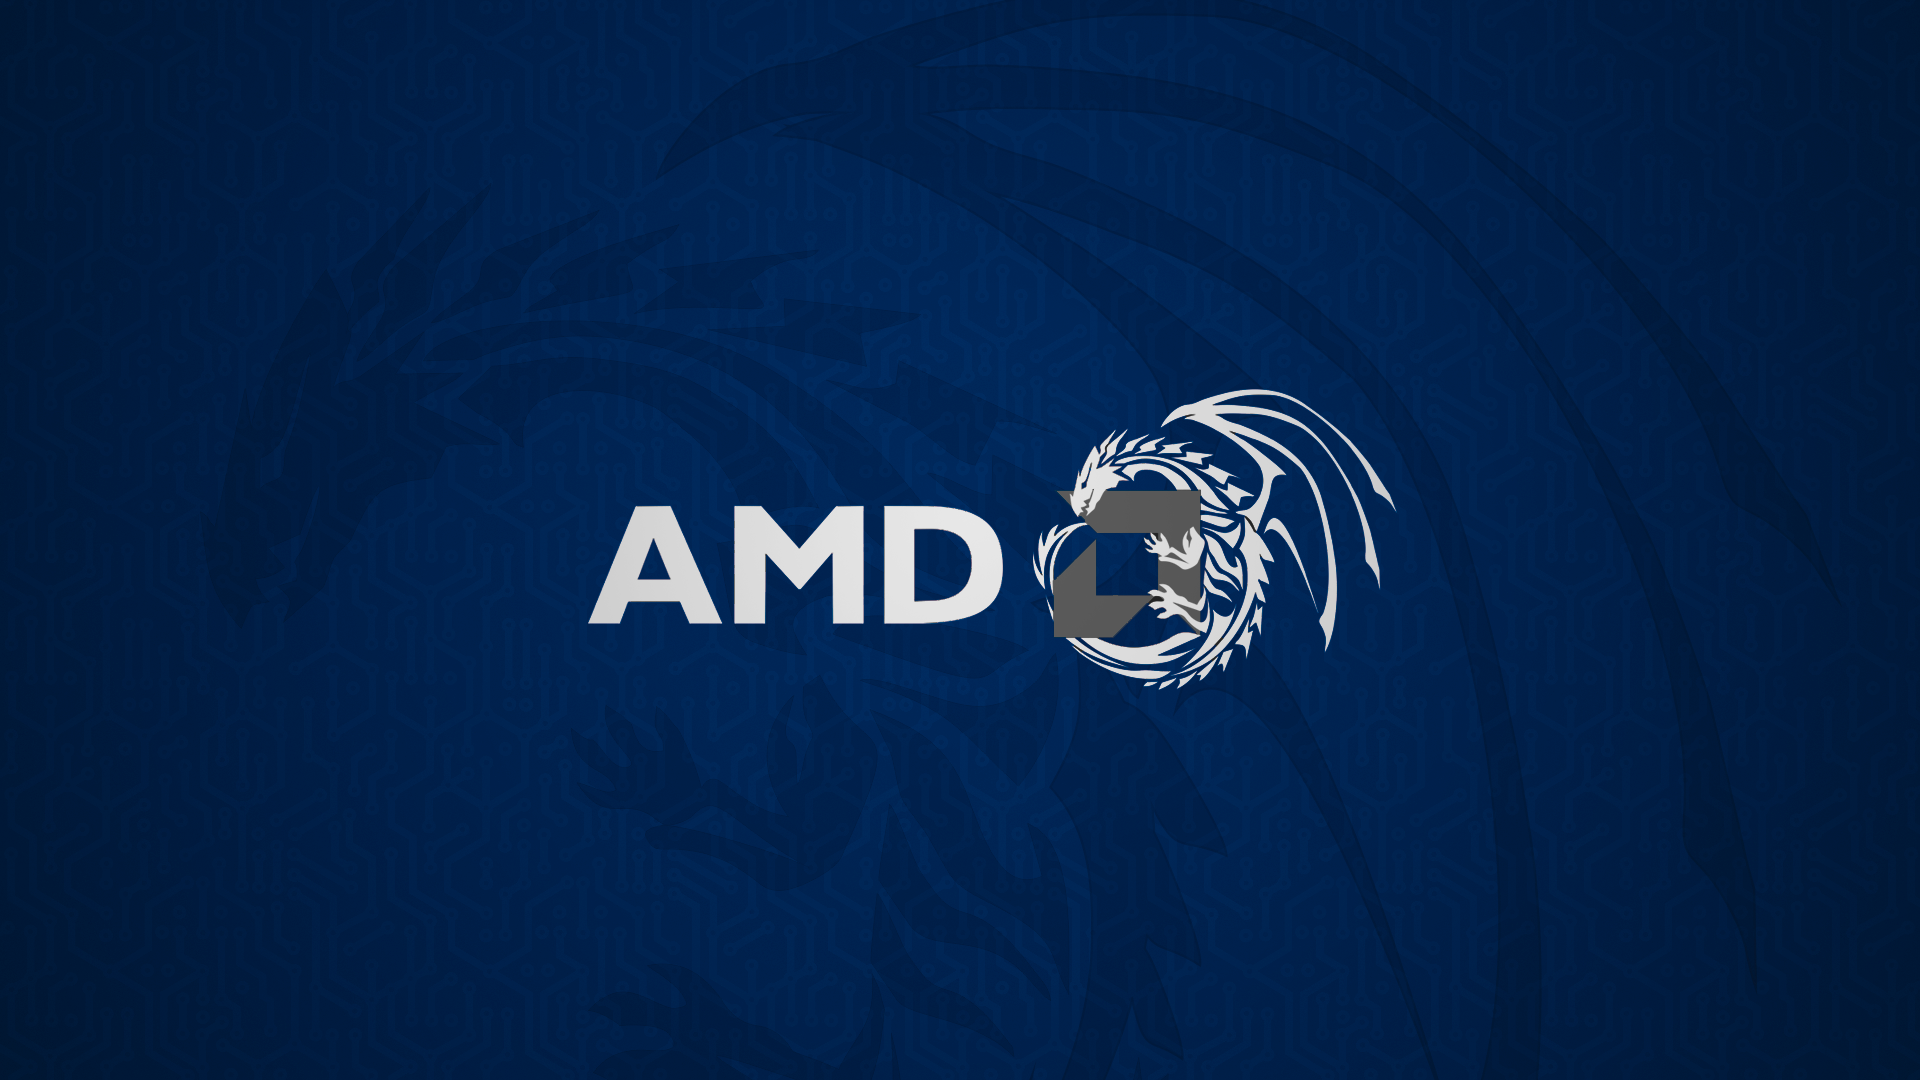 AMD Blue Dragon, HD Computer, 4k Wallpaper, Image, Background